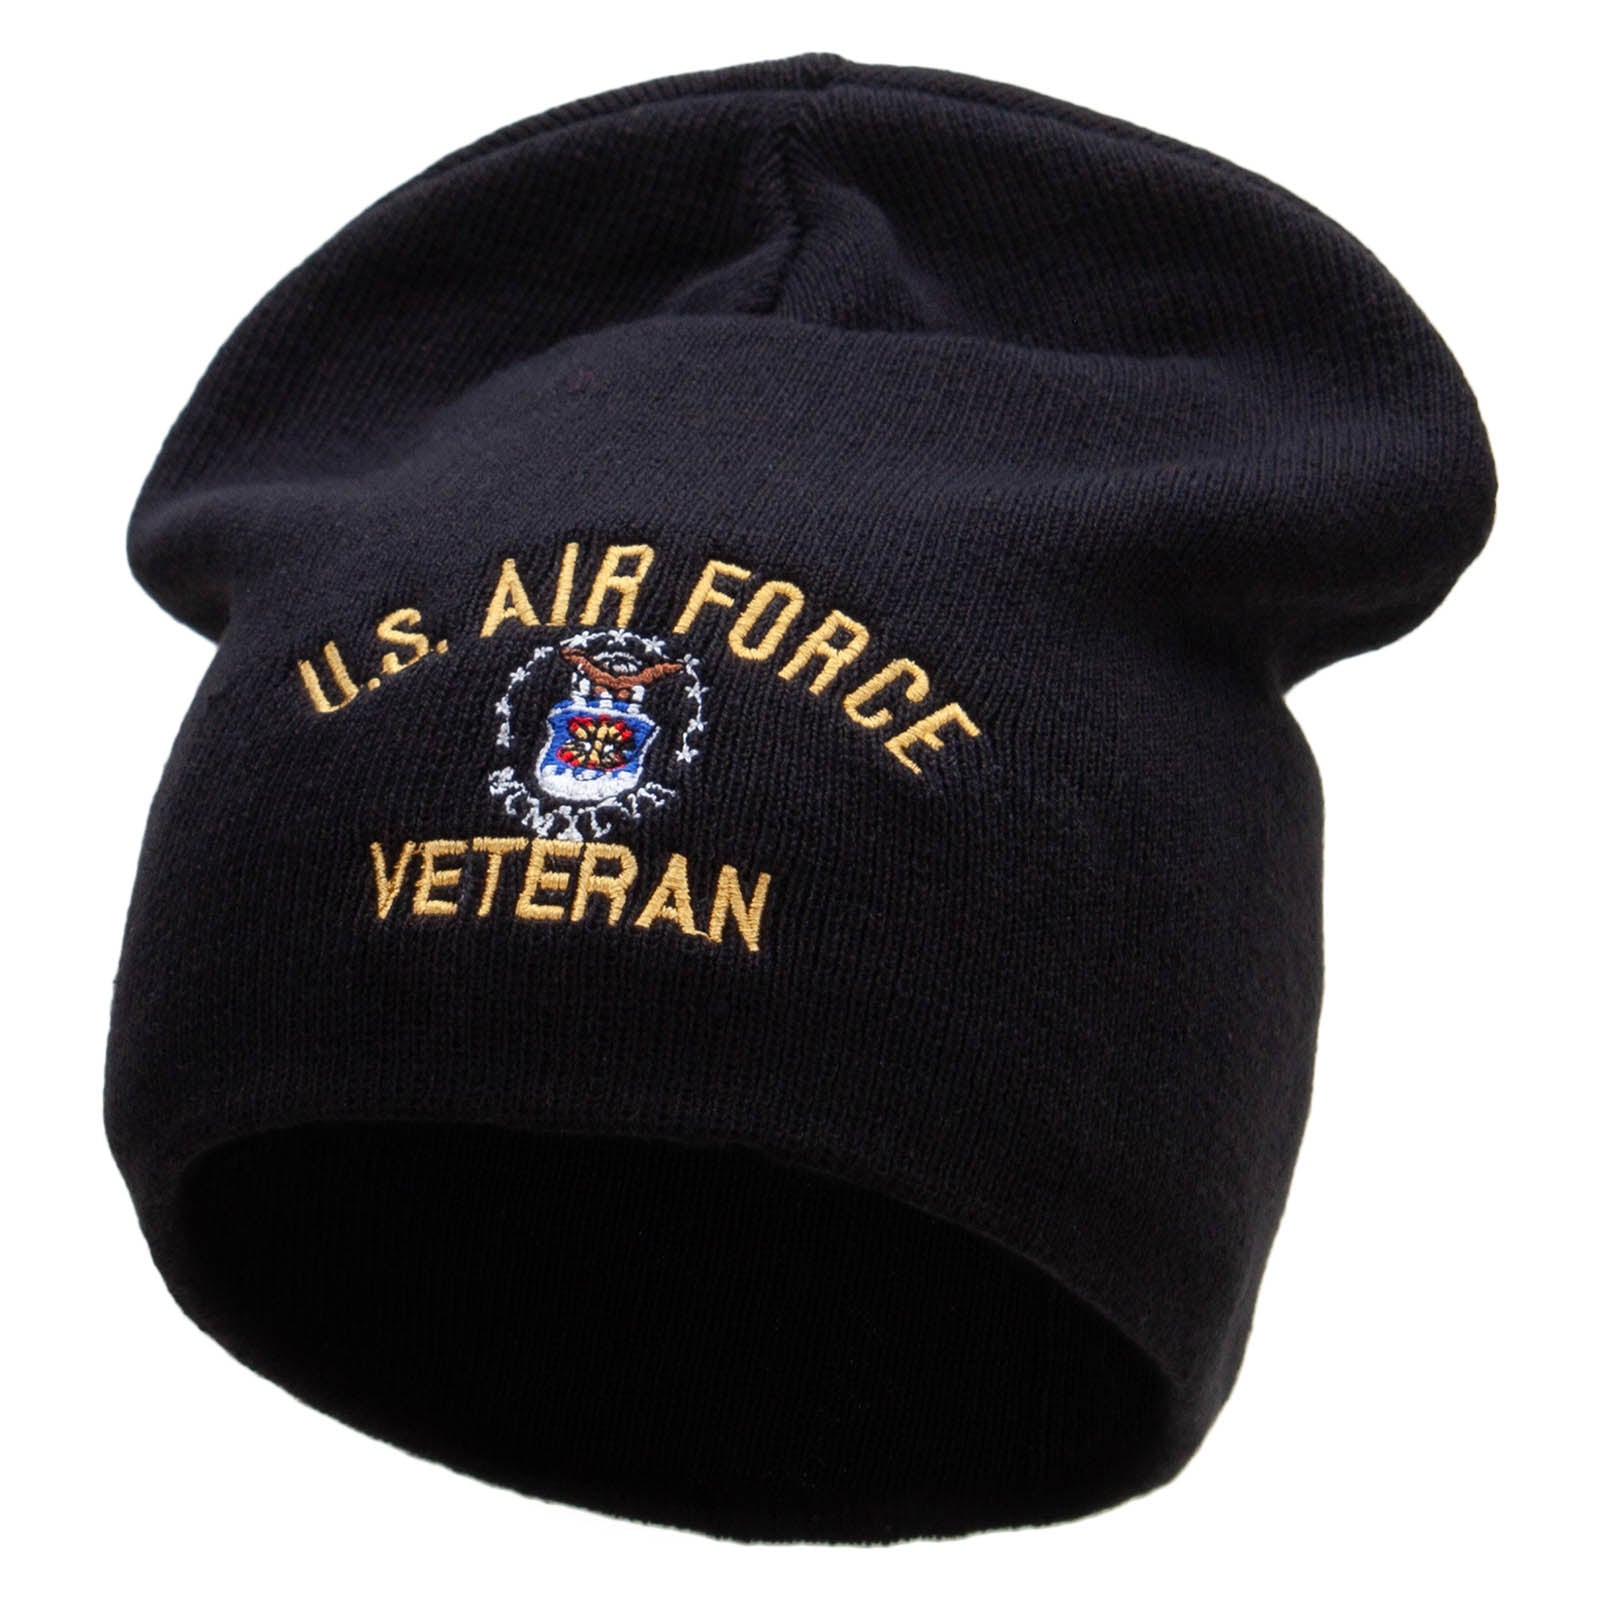 US Air Force Veteran Big Size Superior Cotton Short Knit Beanie - Black XL-3XL